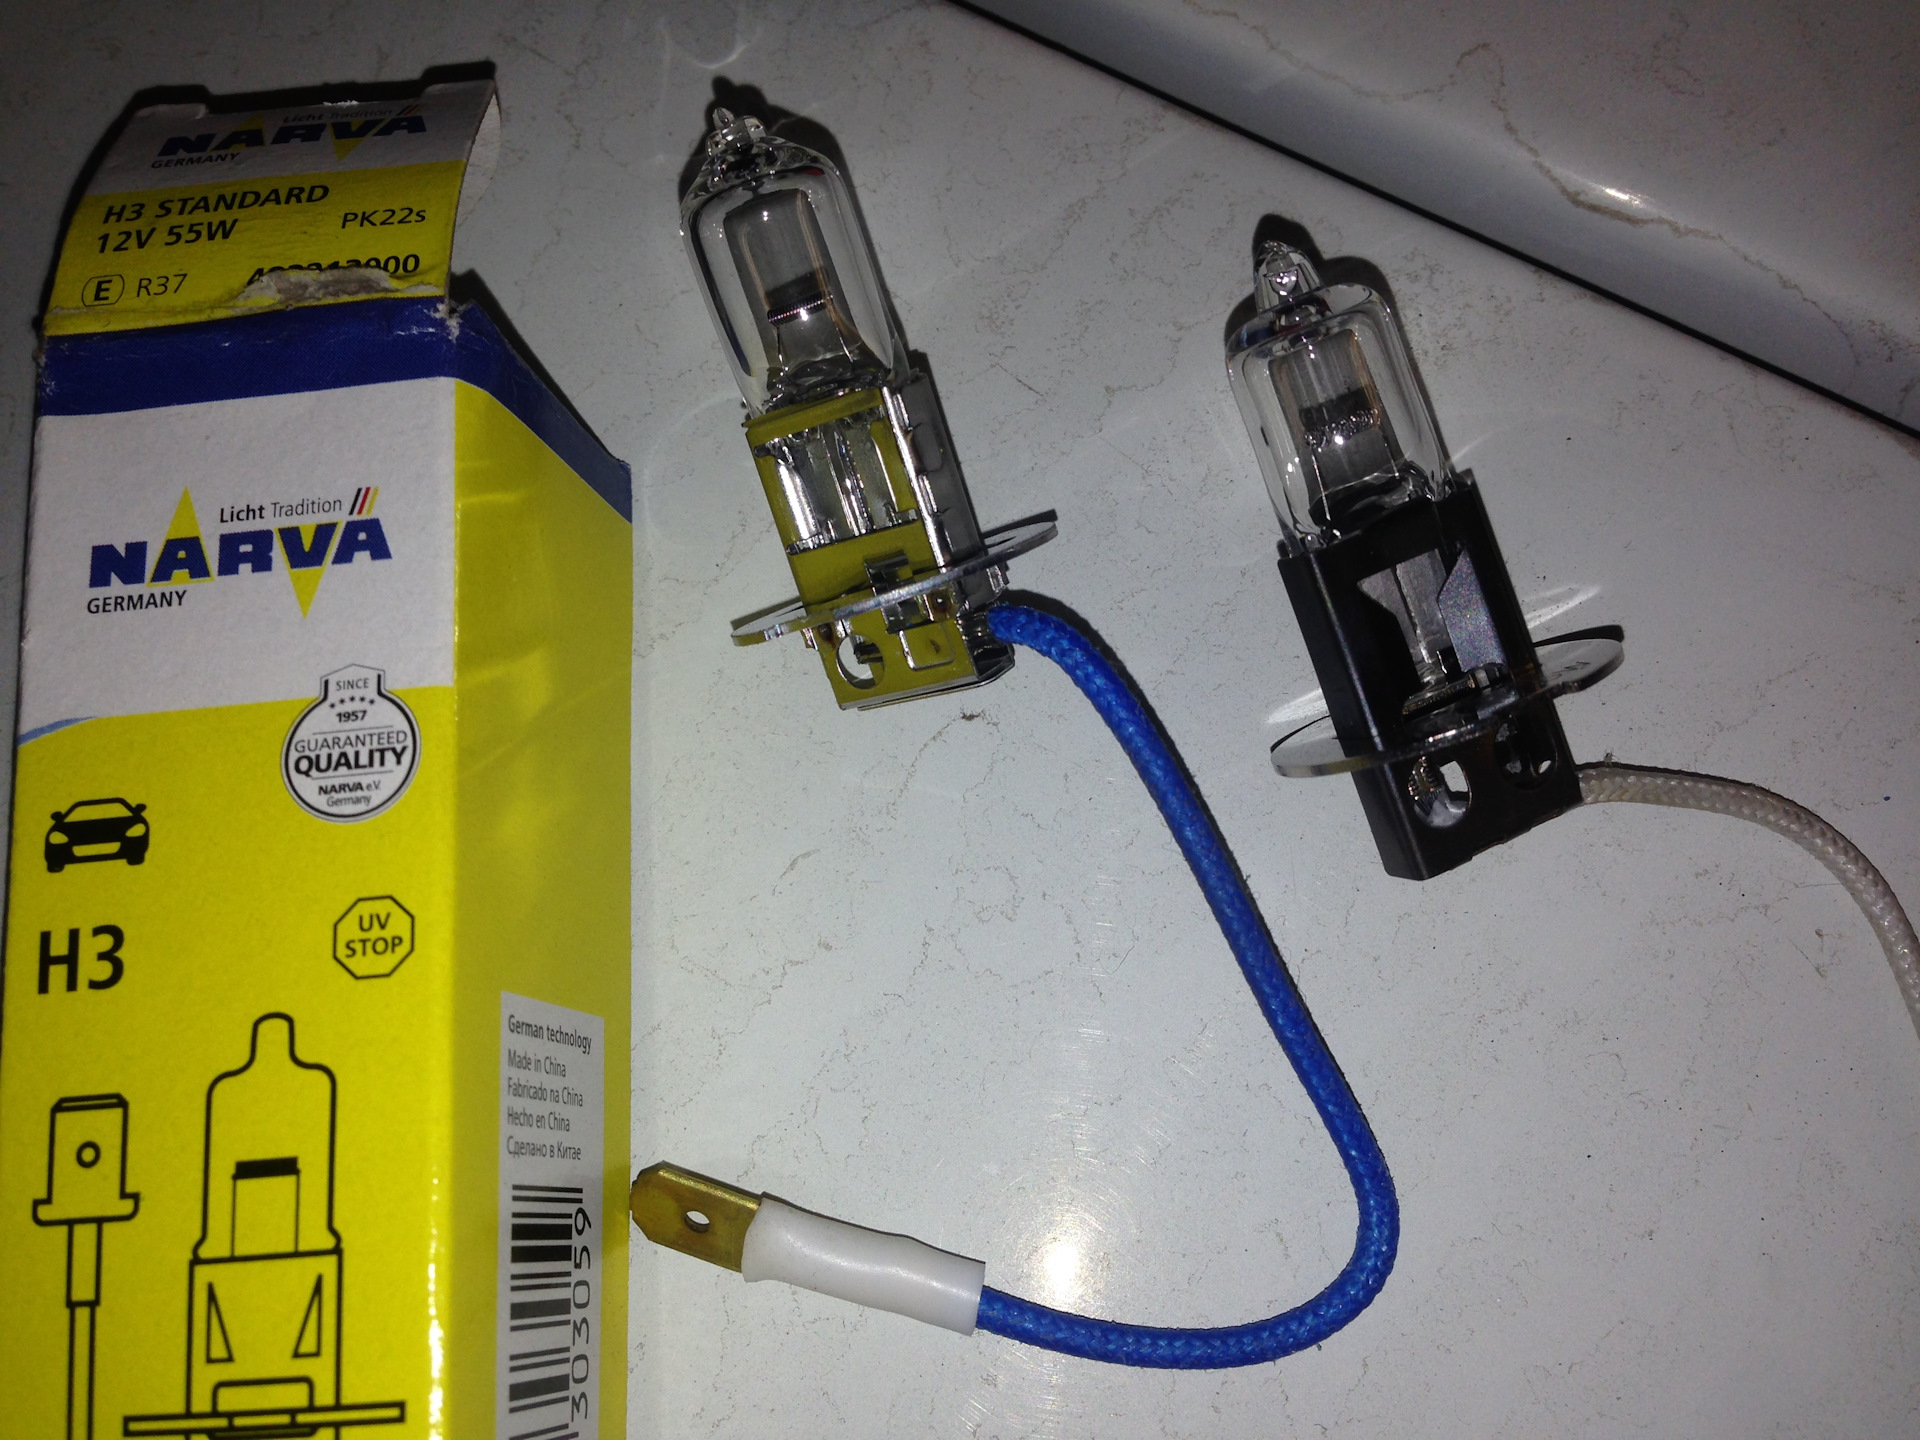 Н3 12v. Лампа н3 светодиодная противотуманная лампа н3. Желтые лампы н3 в противотуманки. Автолампа н3 12 v для противотуманных фар жёлтый свет. Диодные лампы Narva h3.